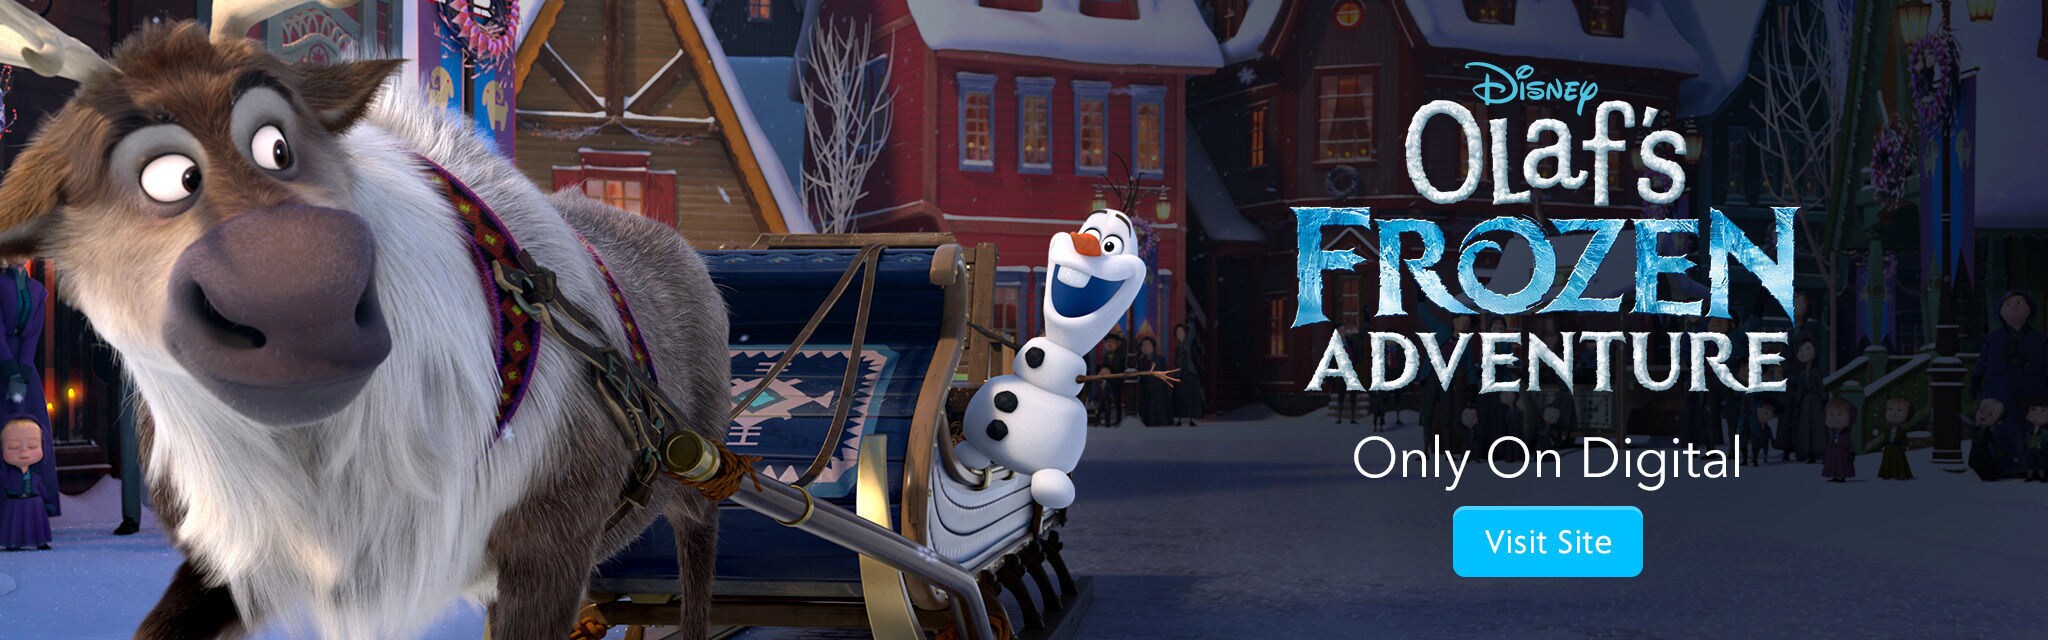 Olaf s Frozen Adventure ly Digital Visit Site